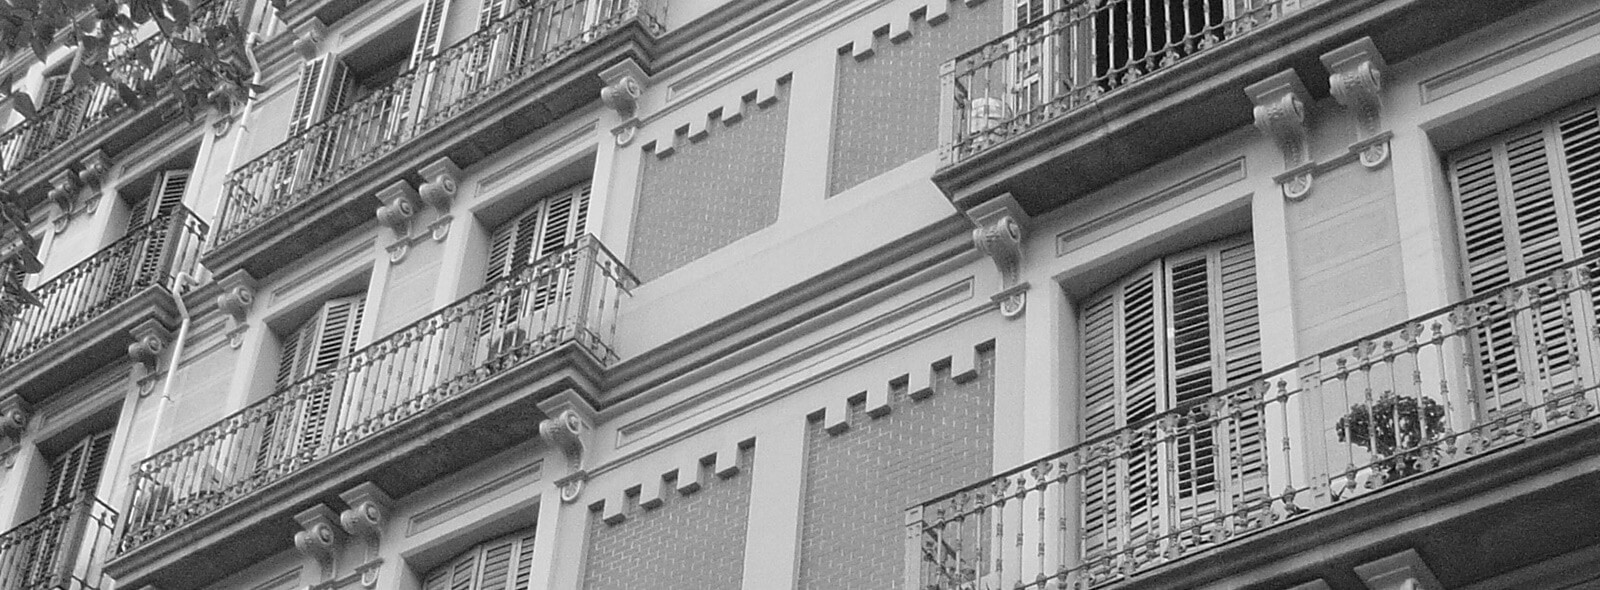 Renta Corporación, venta de edificios en barcelona